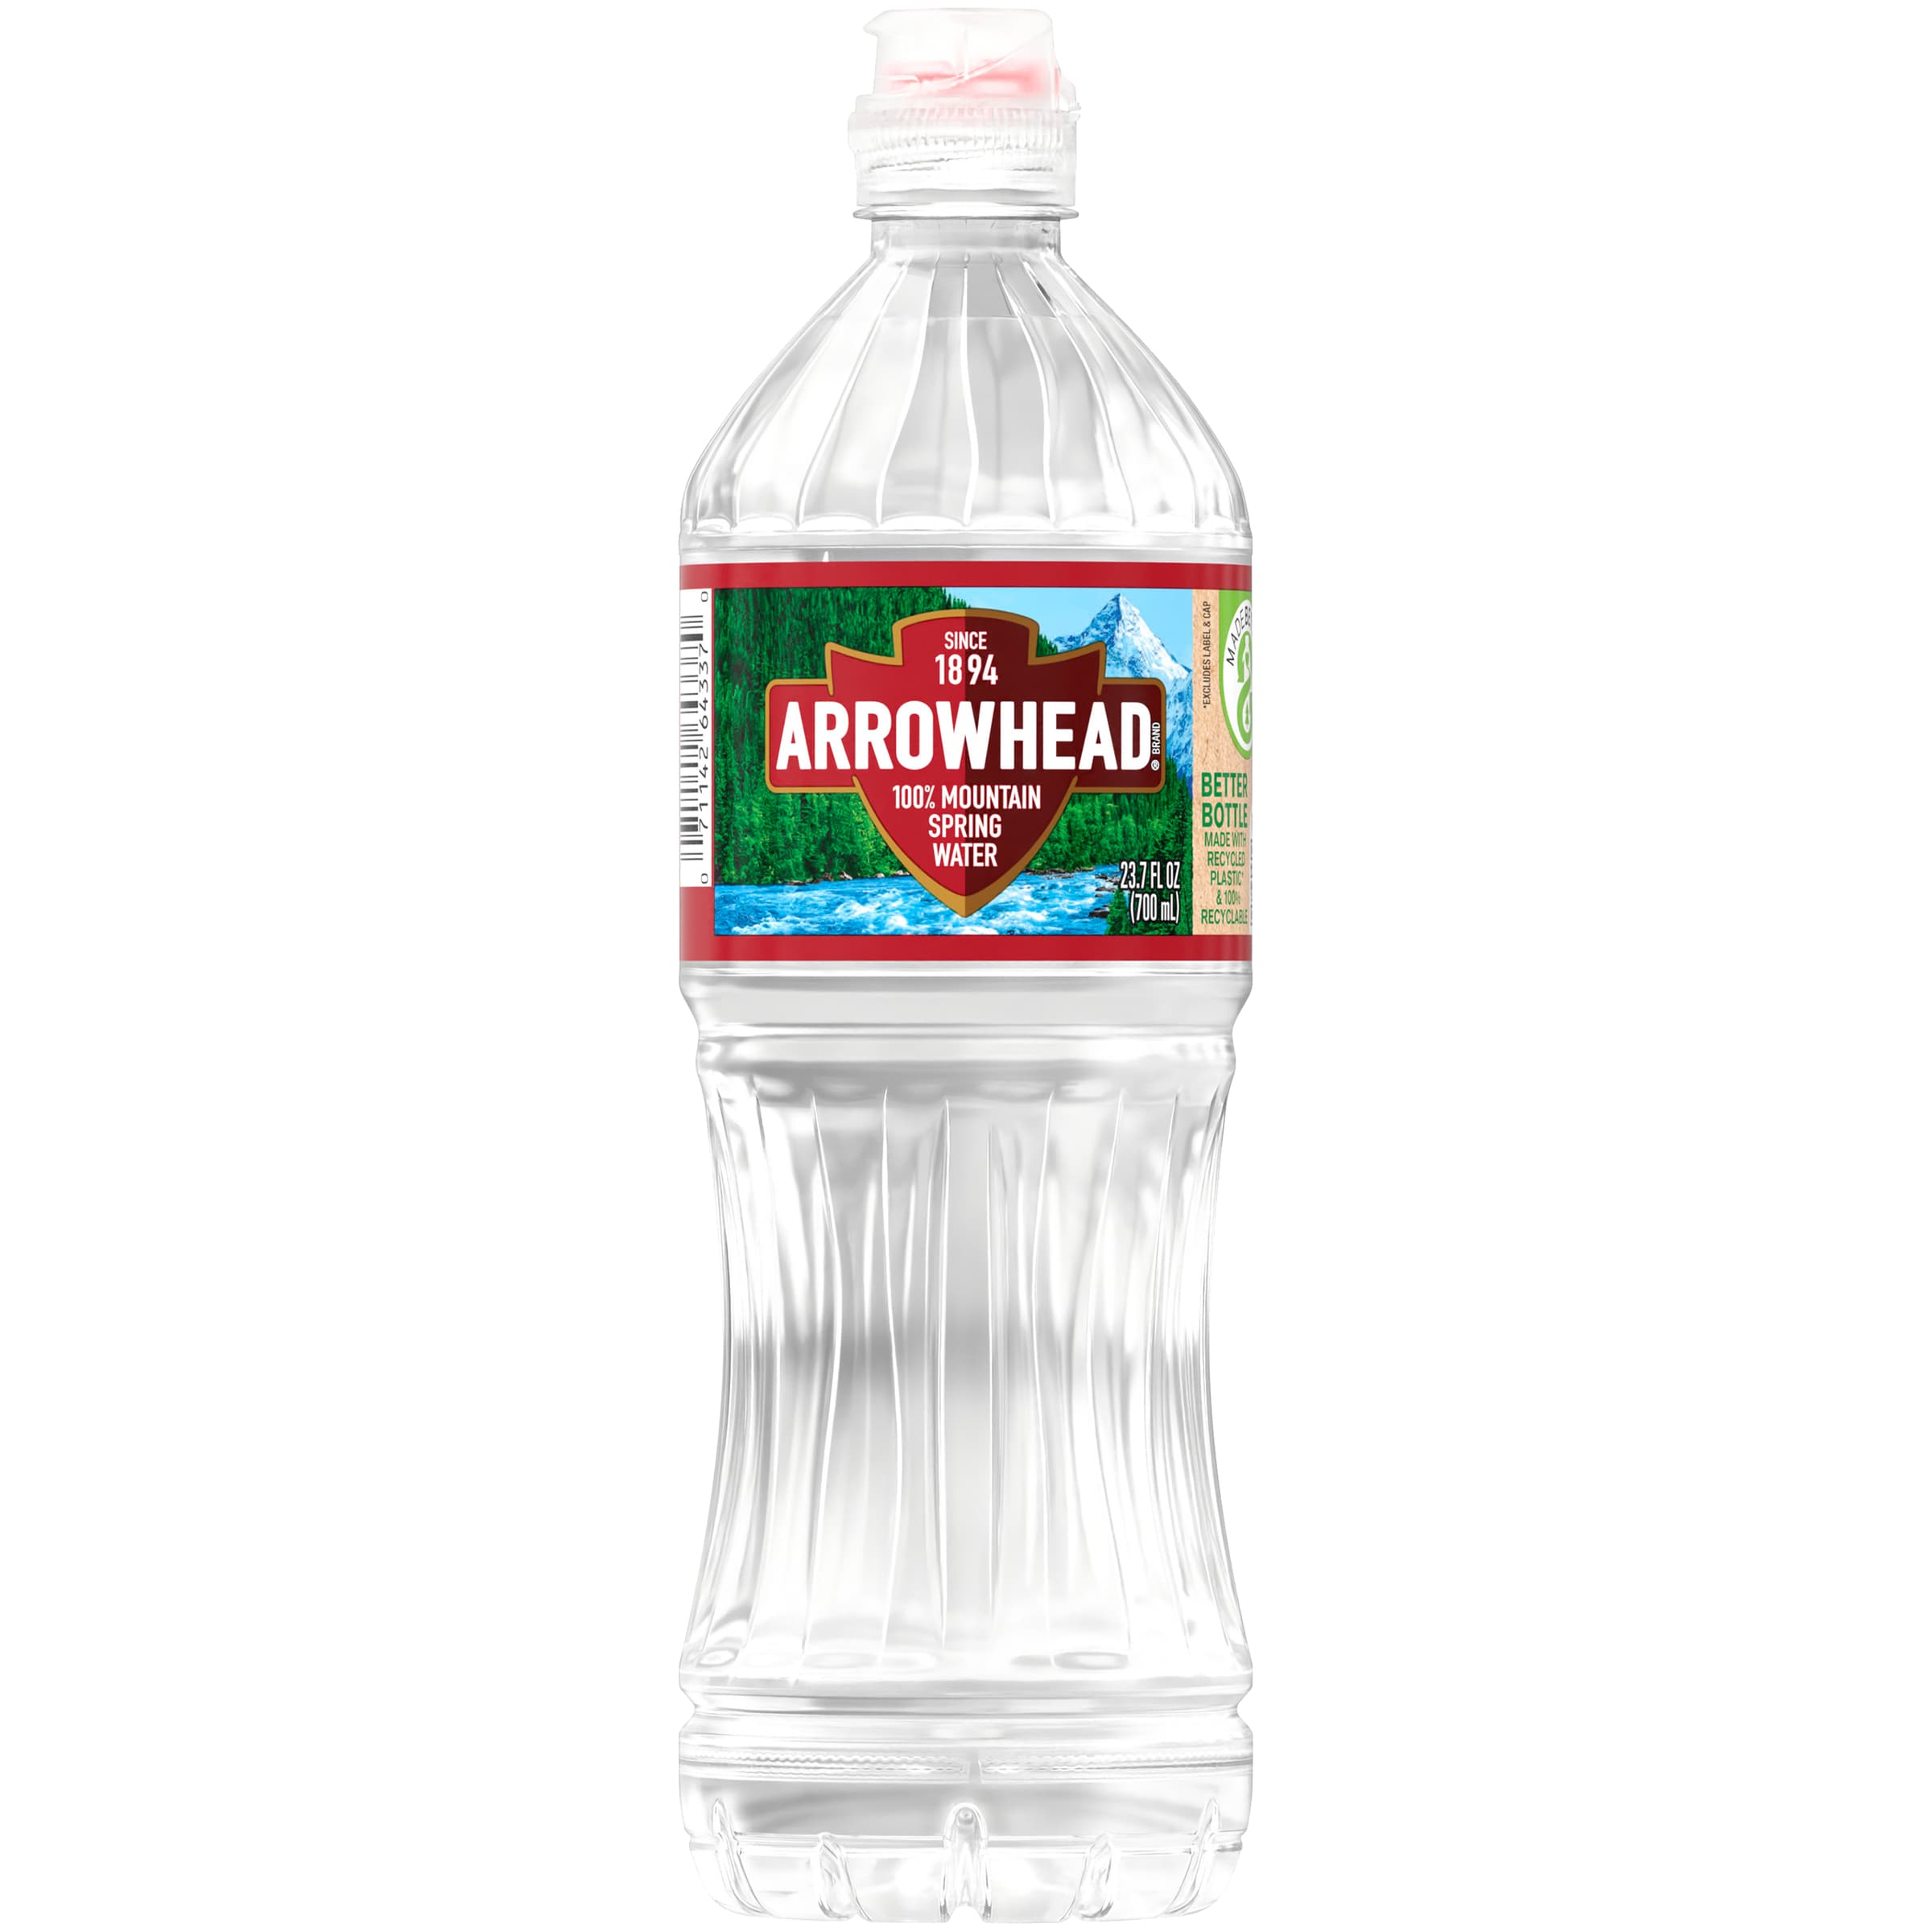 Arrowhead ARROWHEAD SPRING WATER 8 FLOZ 12 PK